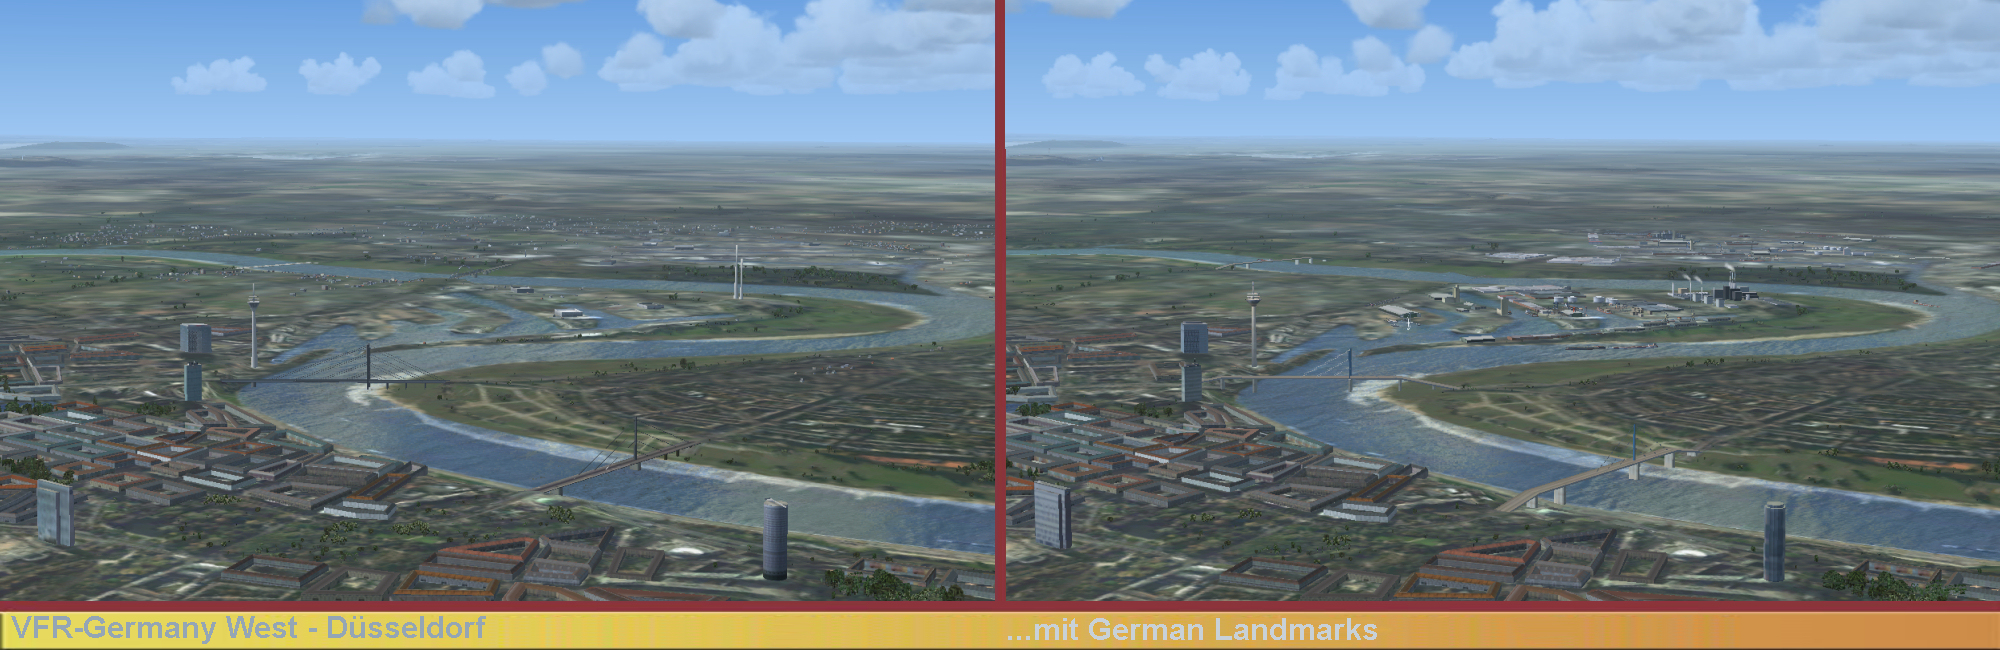 German_Landmarks-VFR-Germany_06.jpg